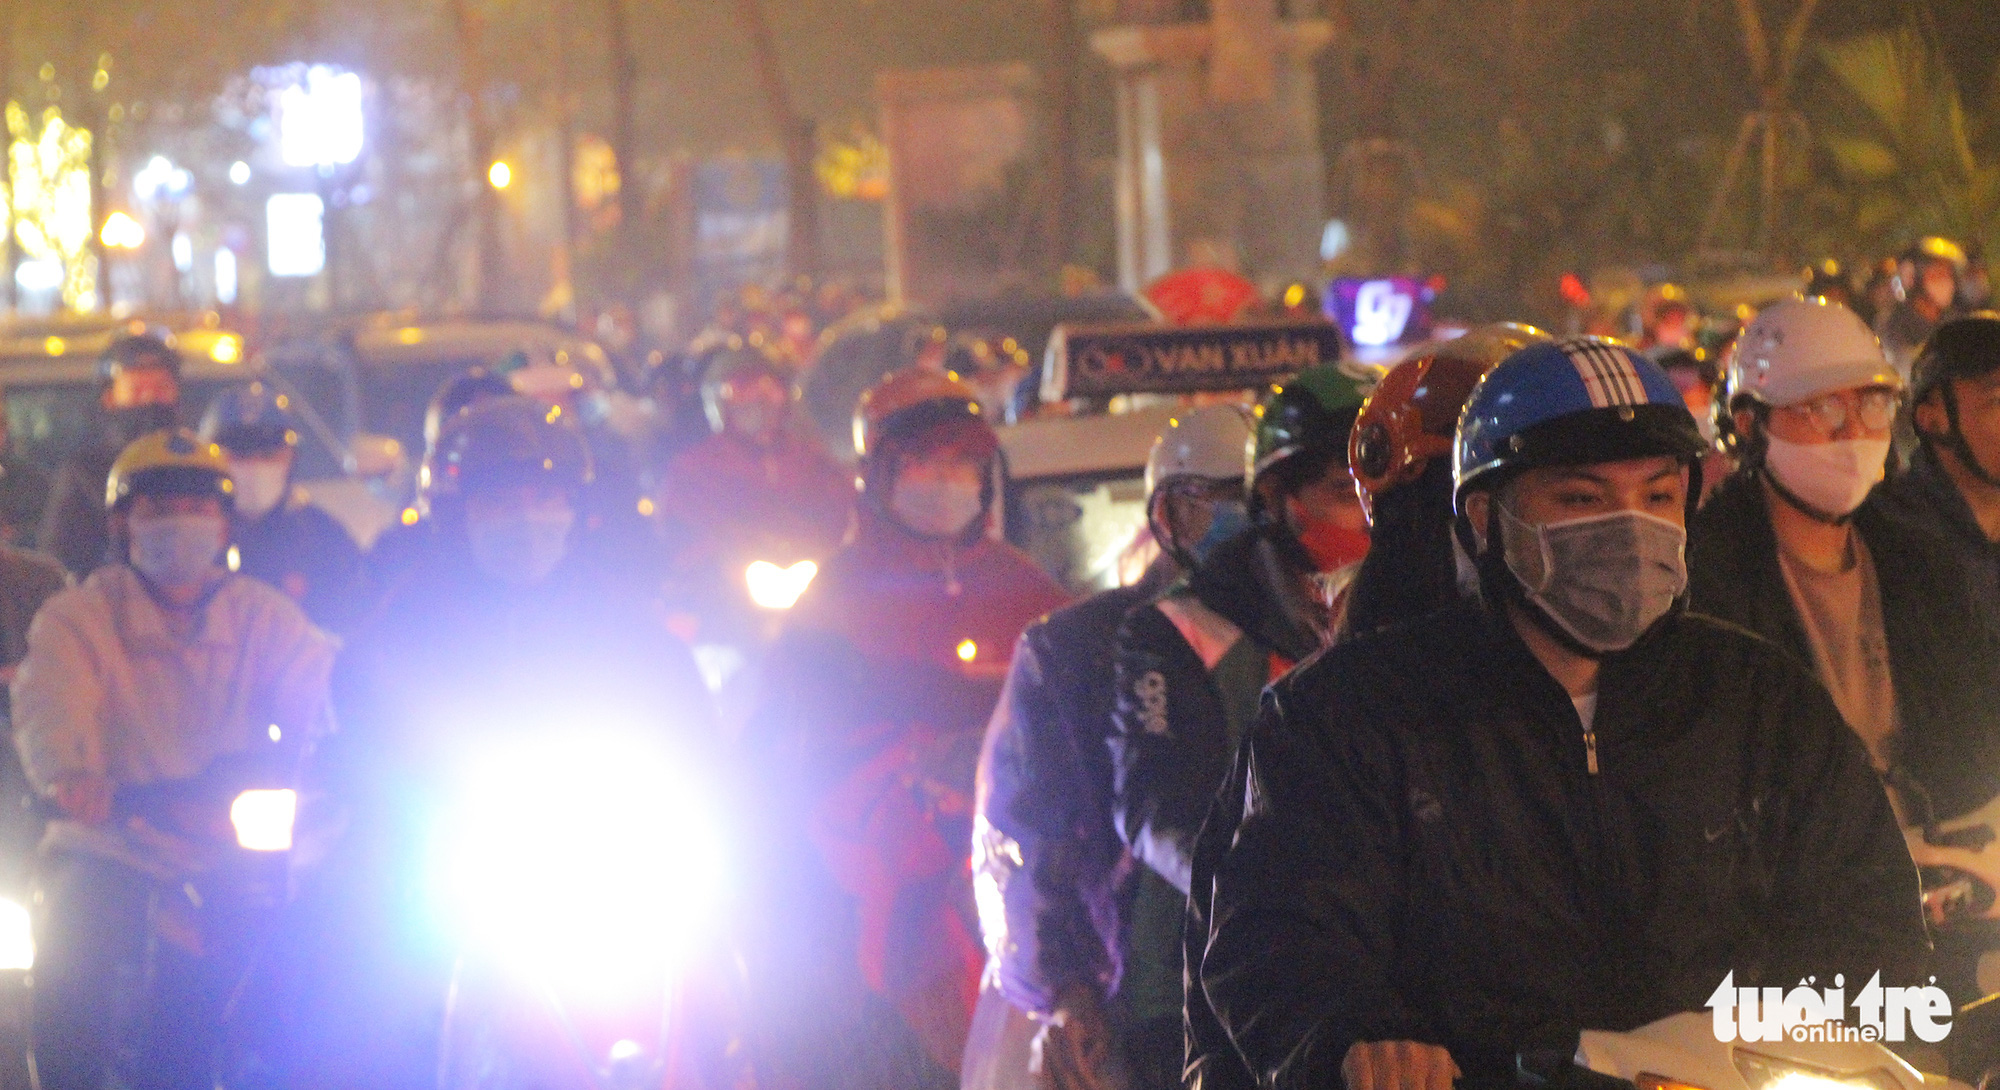 Traffic jammed as Hanoi people end working week in drizzle